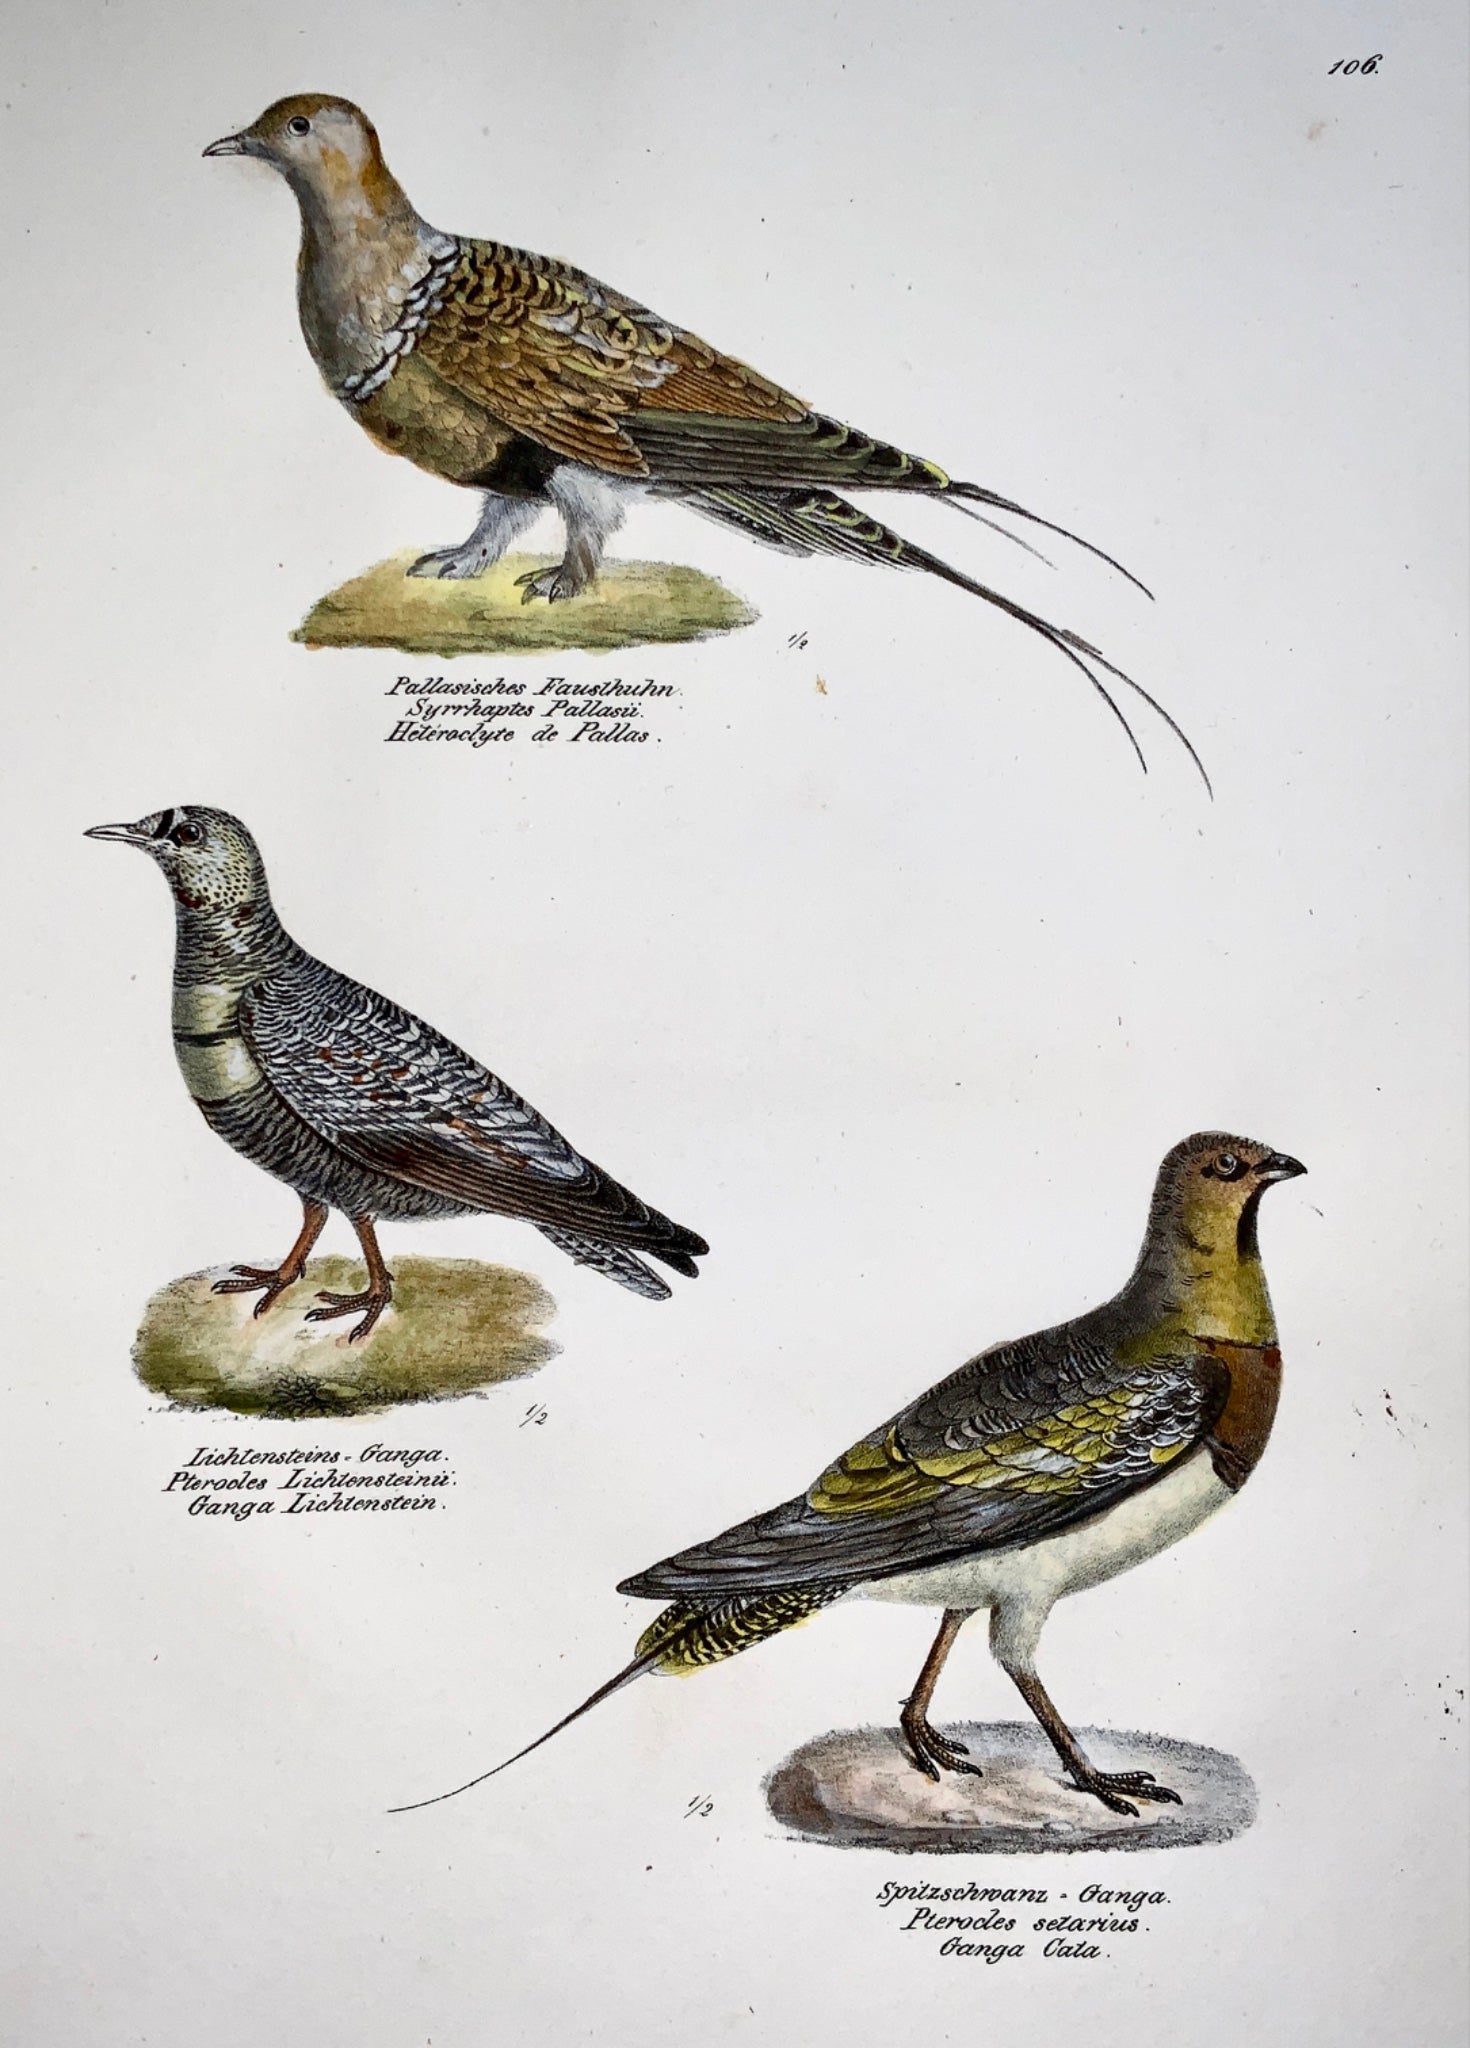 1830 SANDGROUSE - Ornithology - Brodtmann hand coloured FOLIO stone lithograph